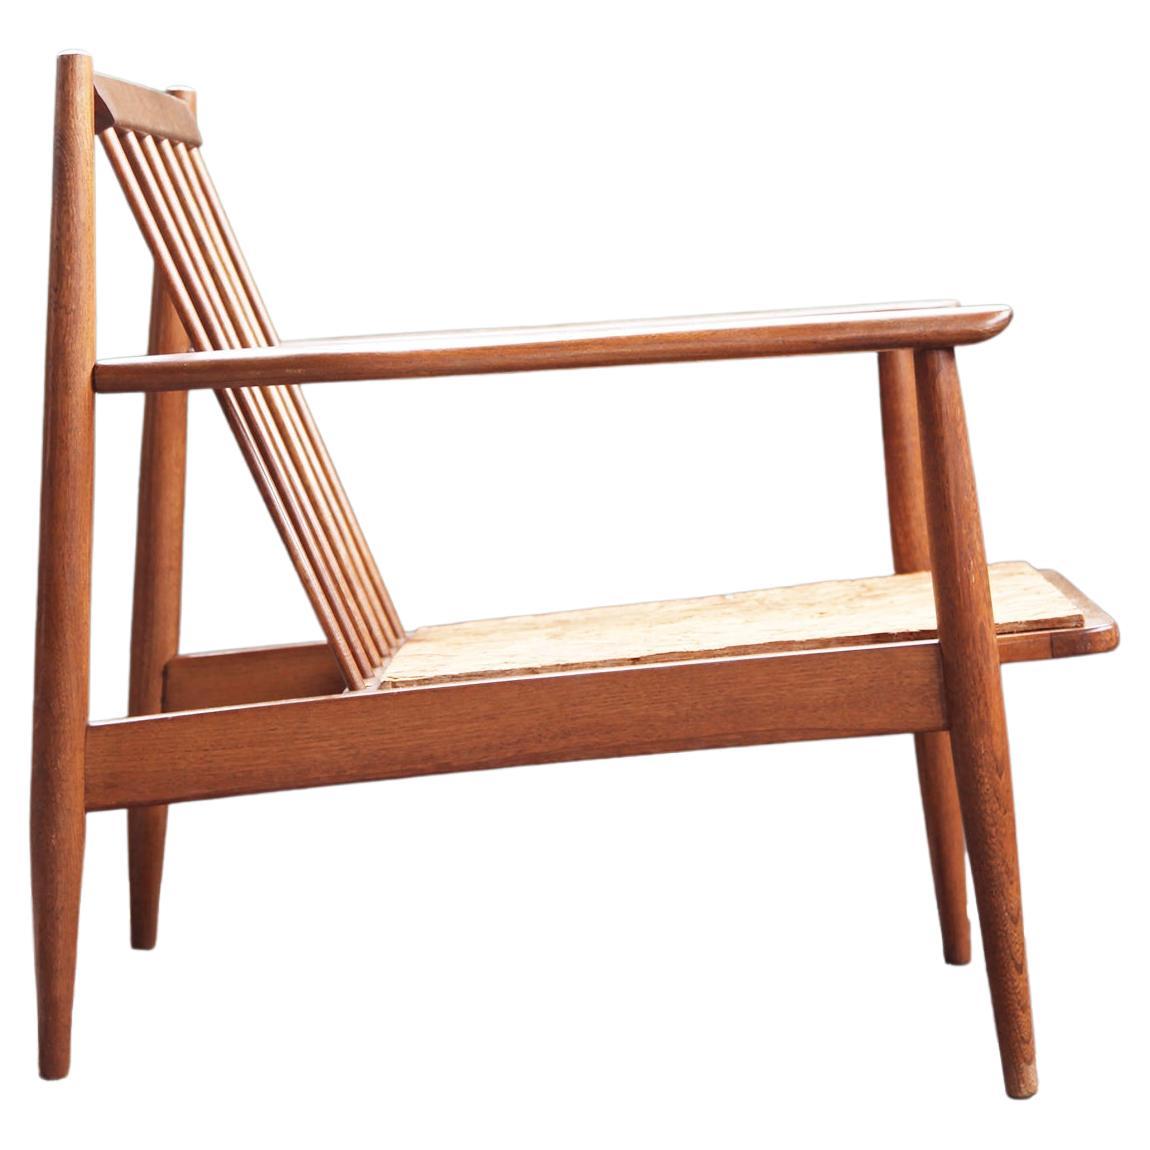 Sleek Sculptural Midcentury Danish Style Walnut Lounge Chair Frame For Sale